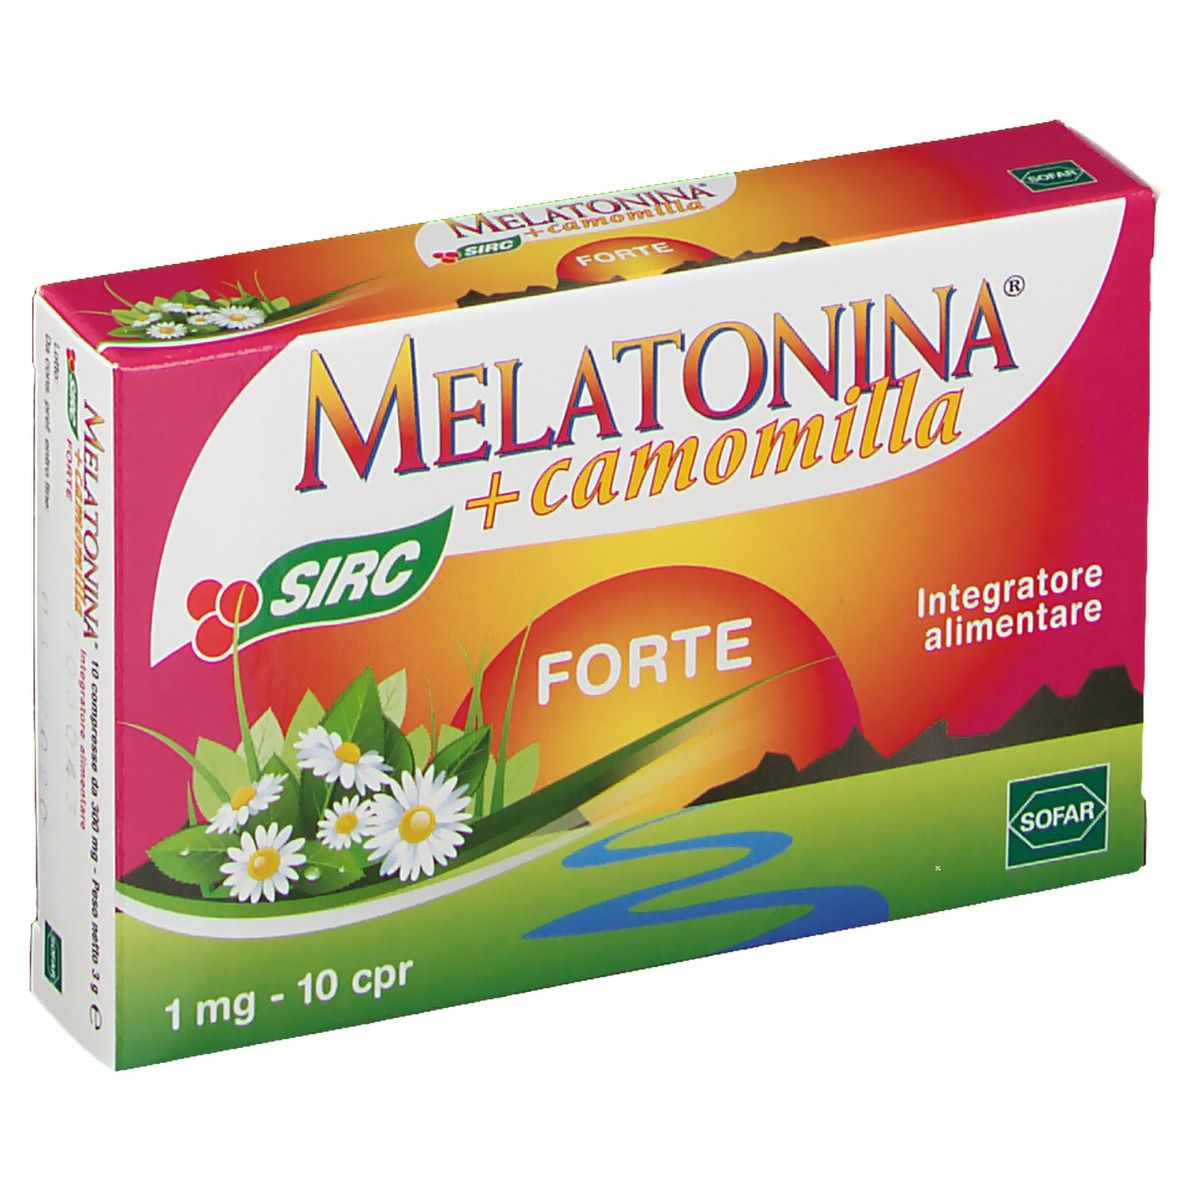 Melatonina® + Camomilla Forte